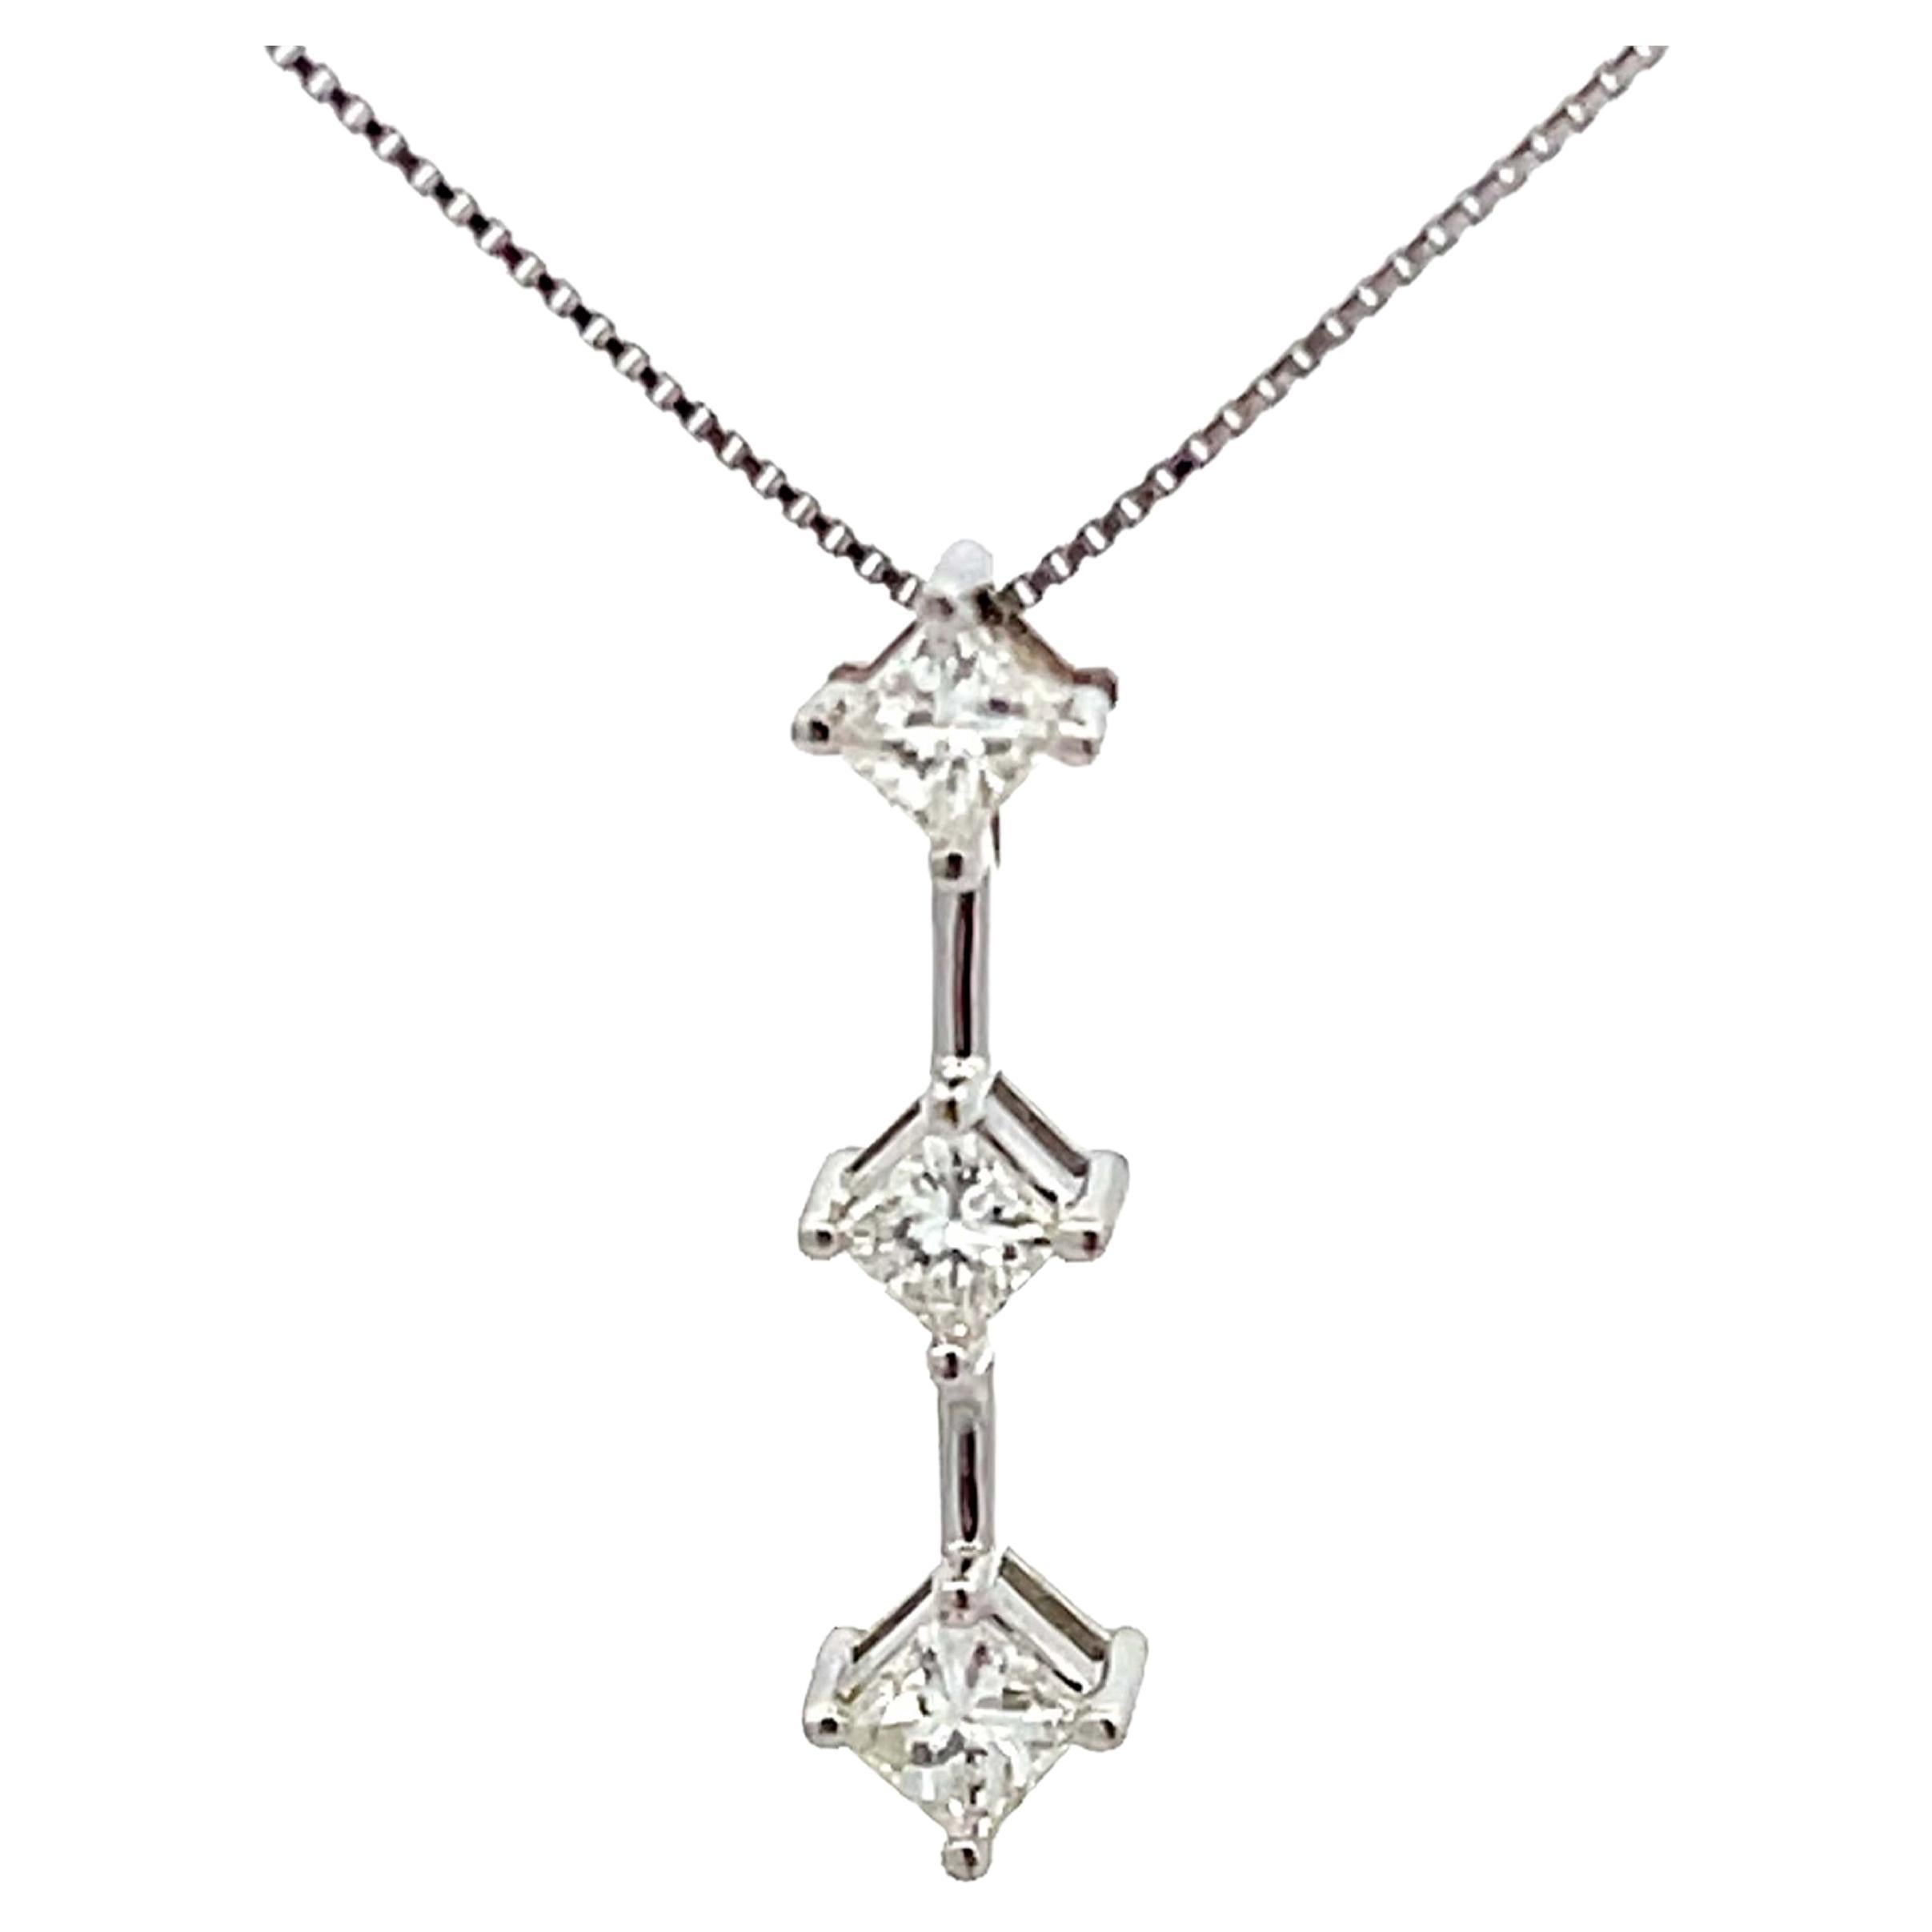 Three Princess Cut Diamond Drop Necklace in 14k White Gold